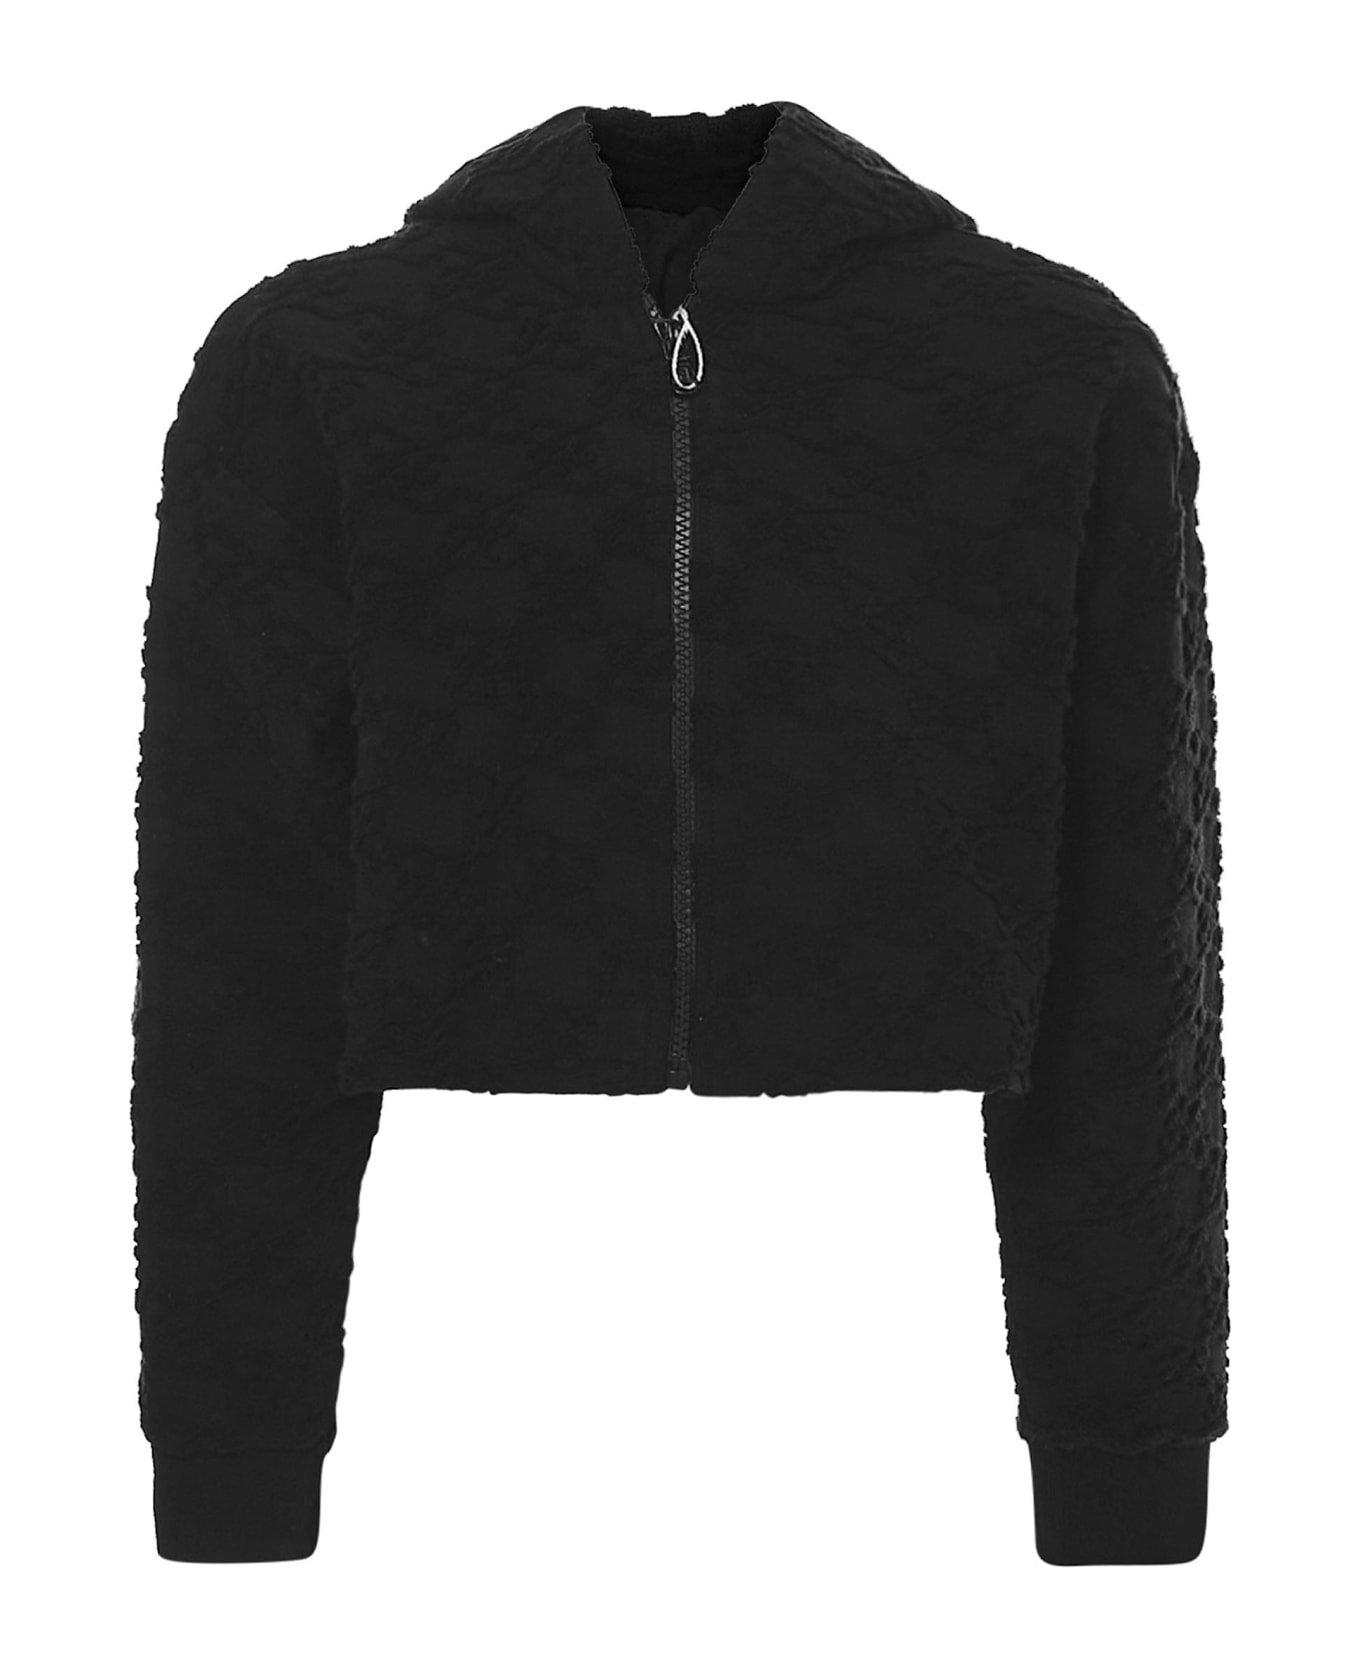 Fendi Sweatshirt - Black